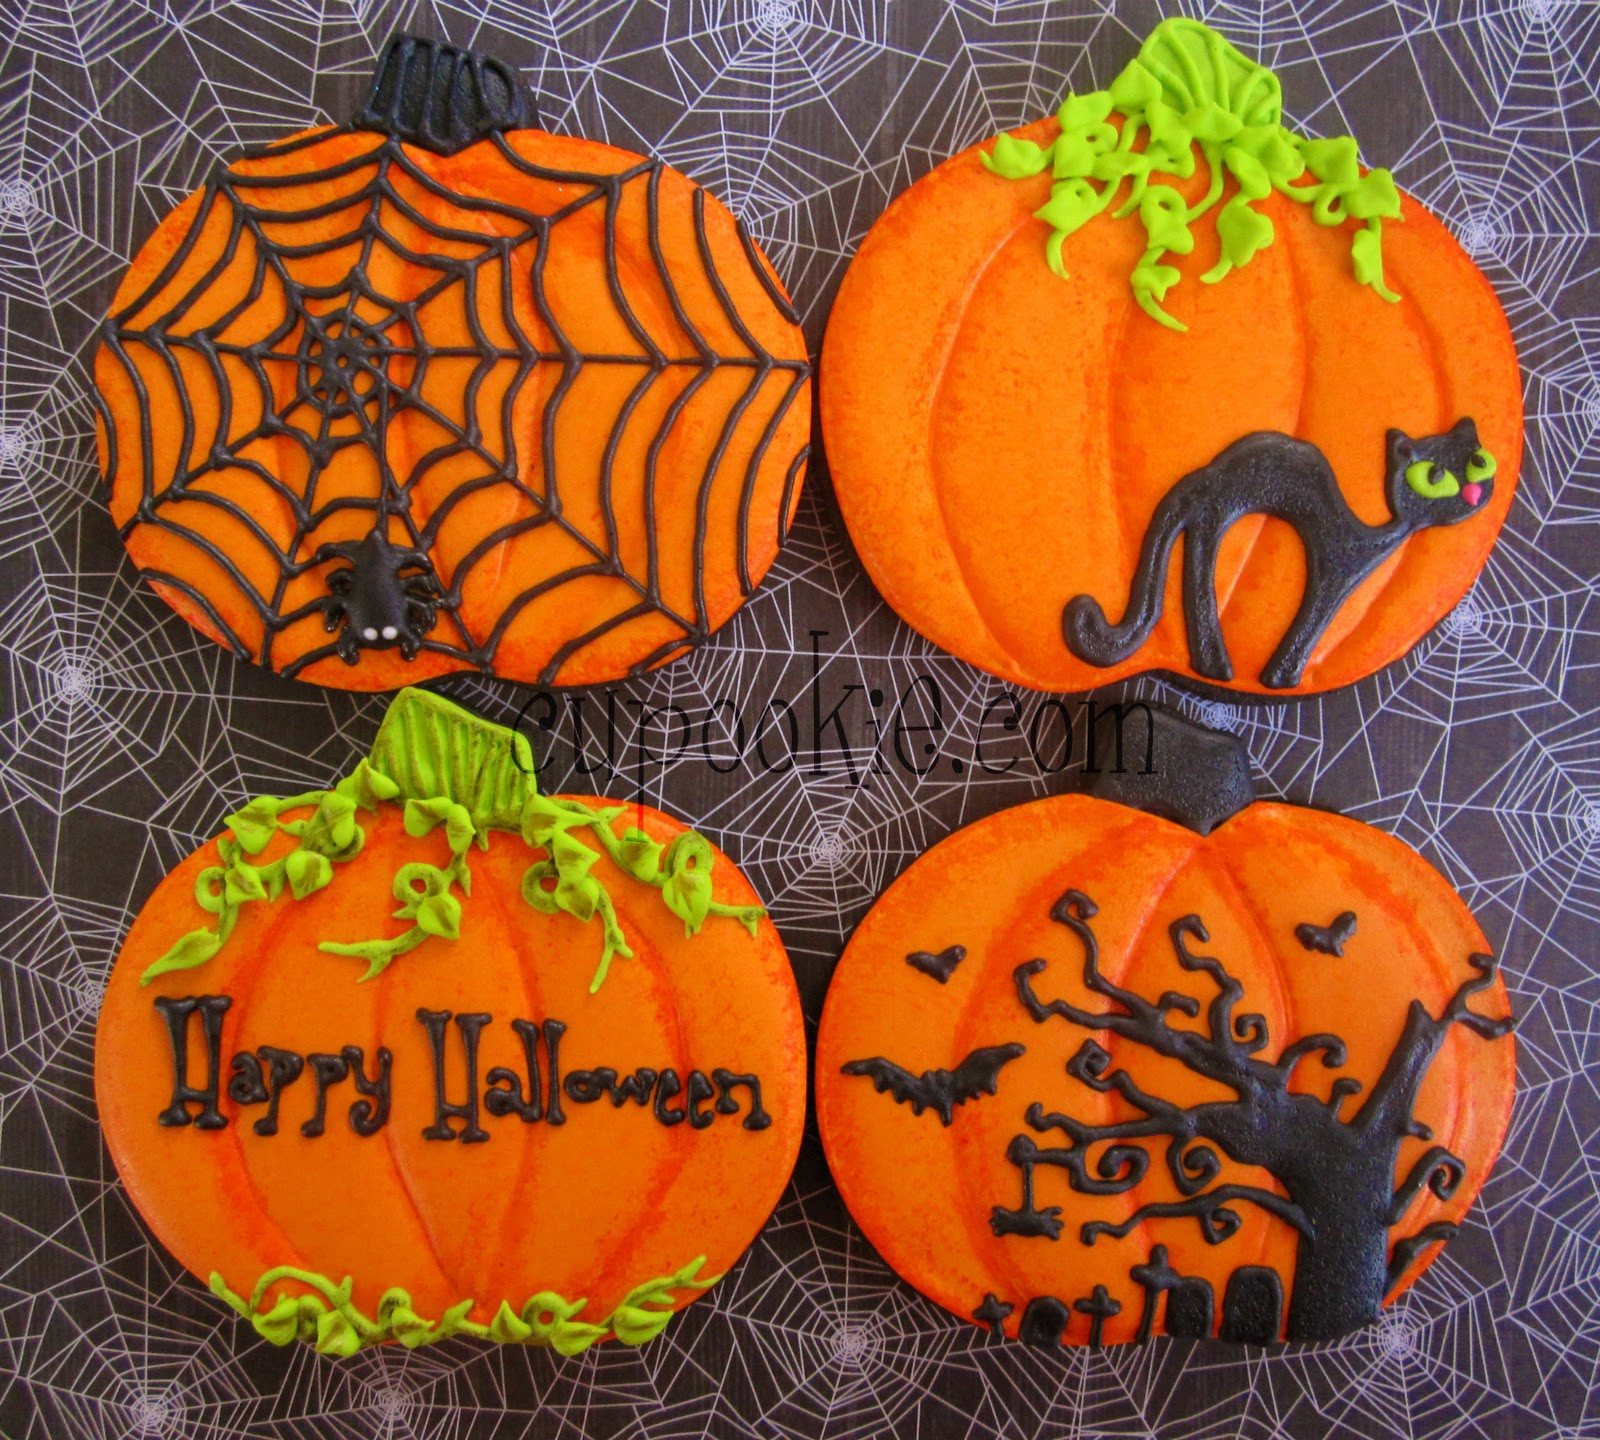 Halloween Cookie Decoration Ideas
 Cupookie Halloween Cookies